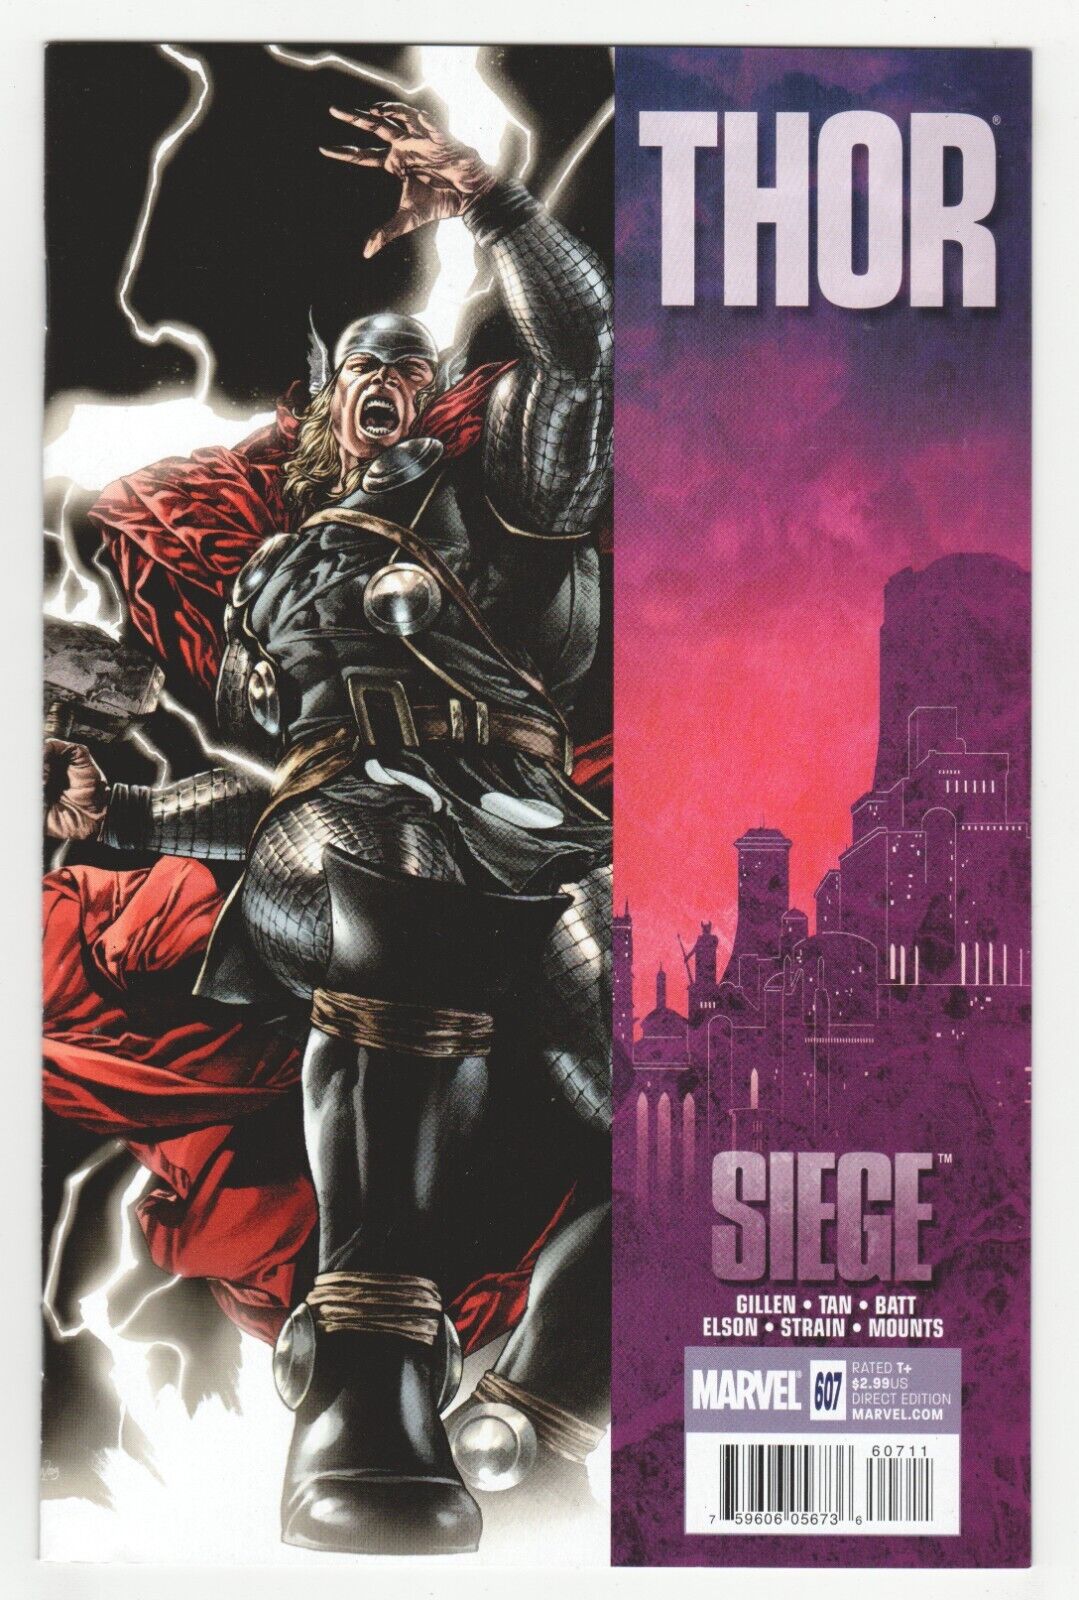 Thor #607 - Siege - KIERON GILLEN Story - MICO SUAYAN Cover Art NM- 9.2